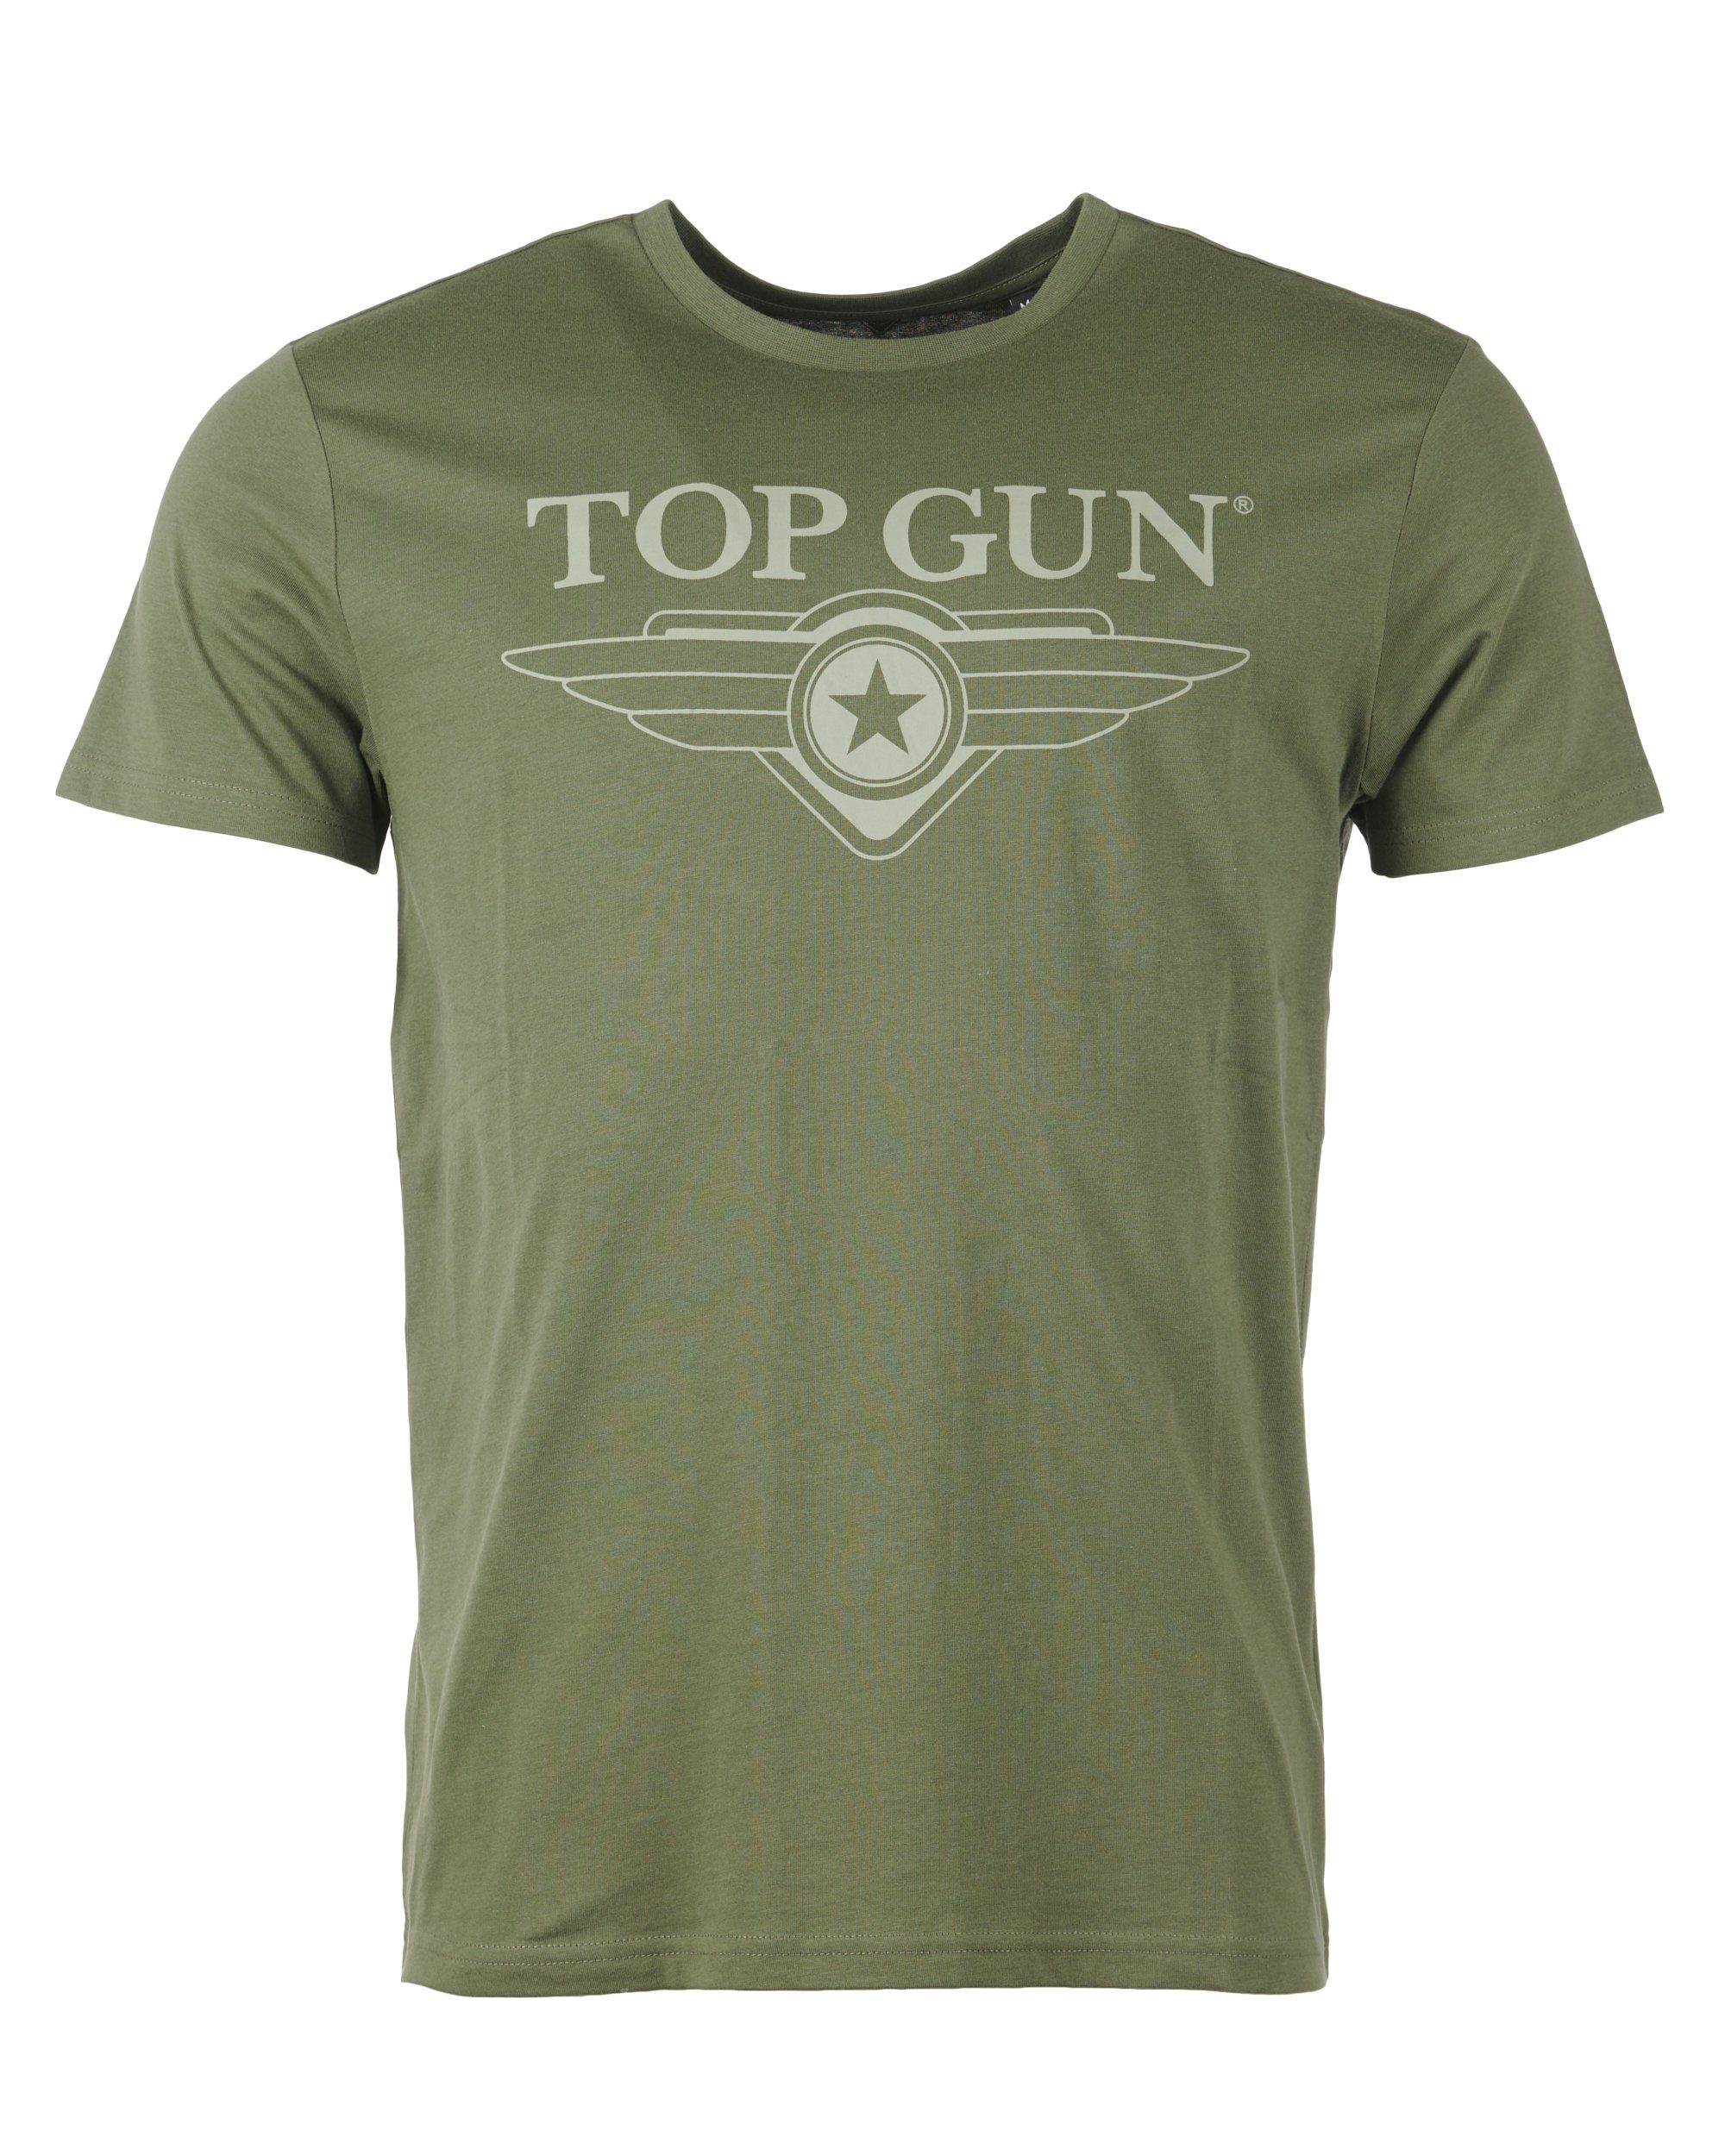 GUN TG20201045 olive T-Shirt TOP